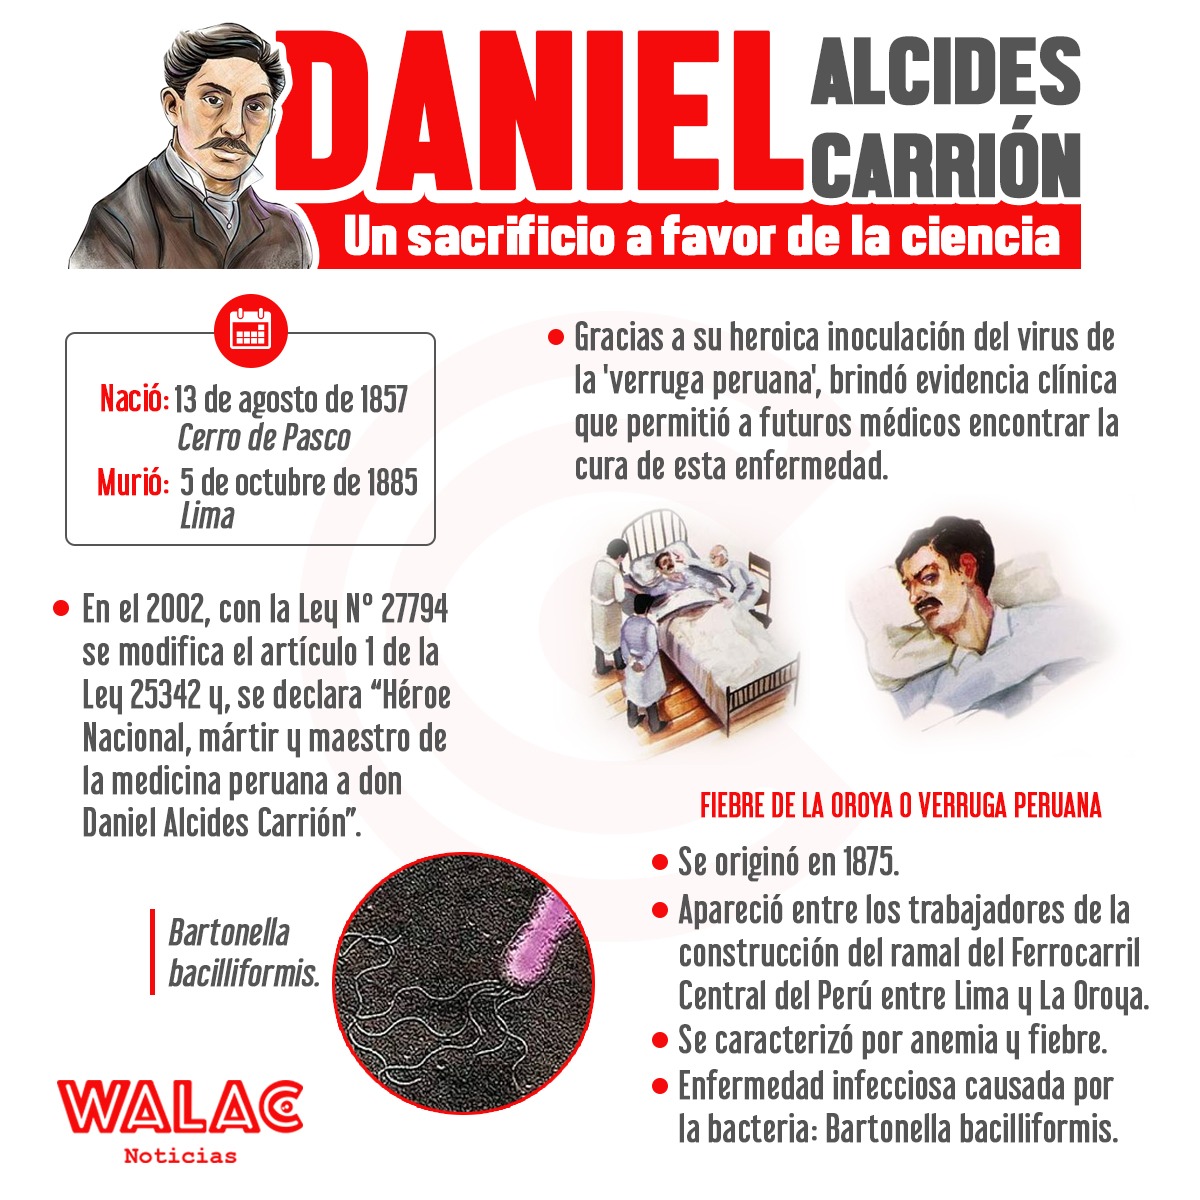 Daniel Alcides Carrión, el héroe que sacrificó su vida a favor de la Medicina Peruana